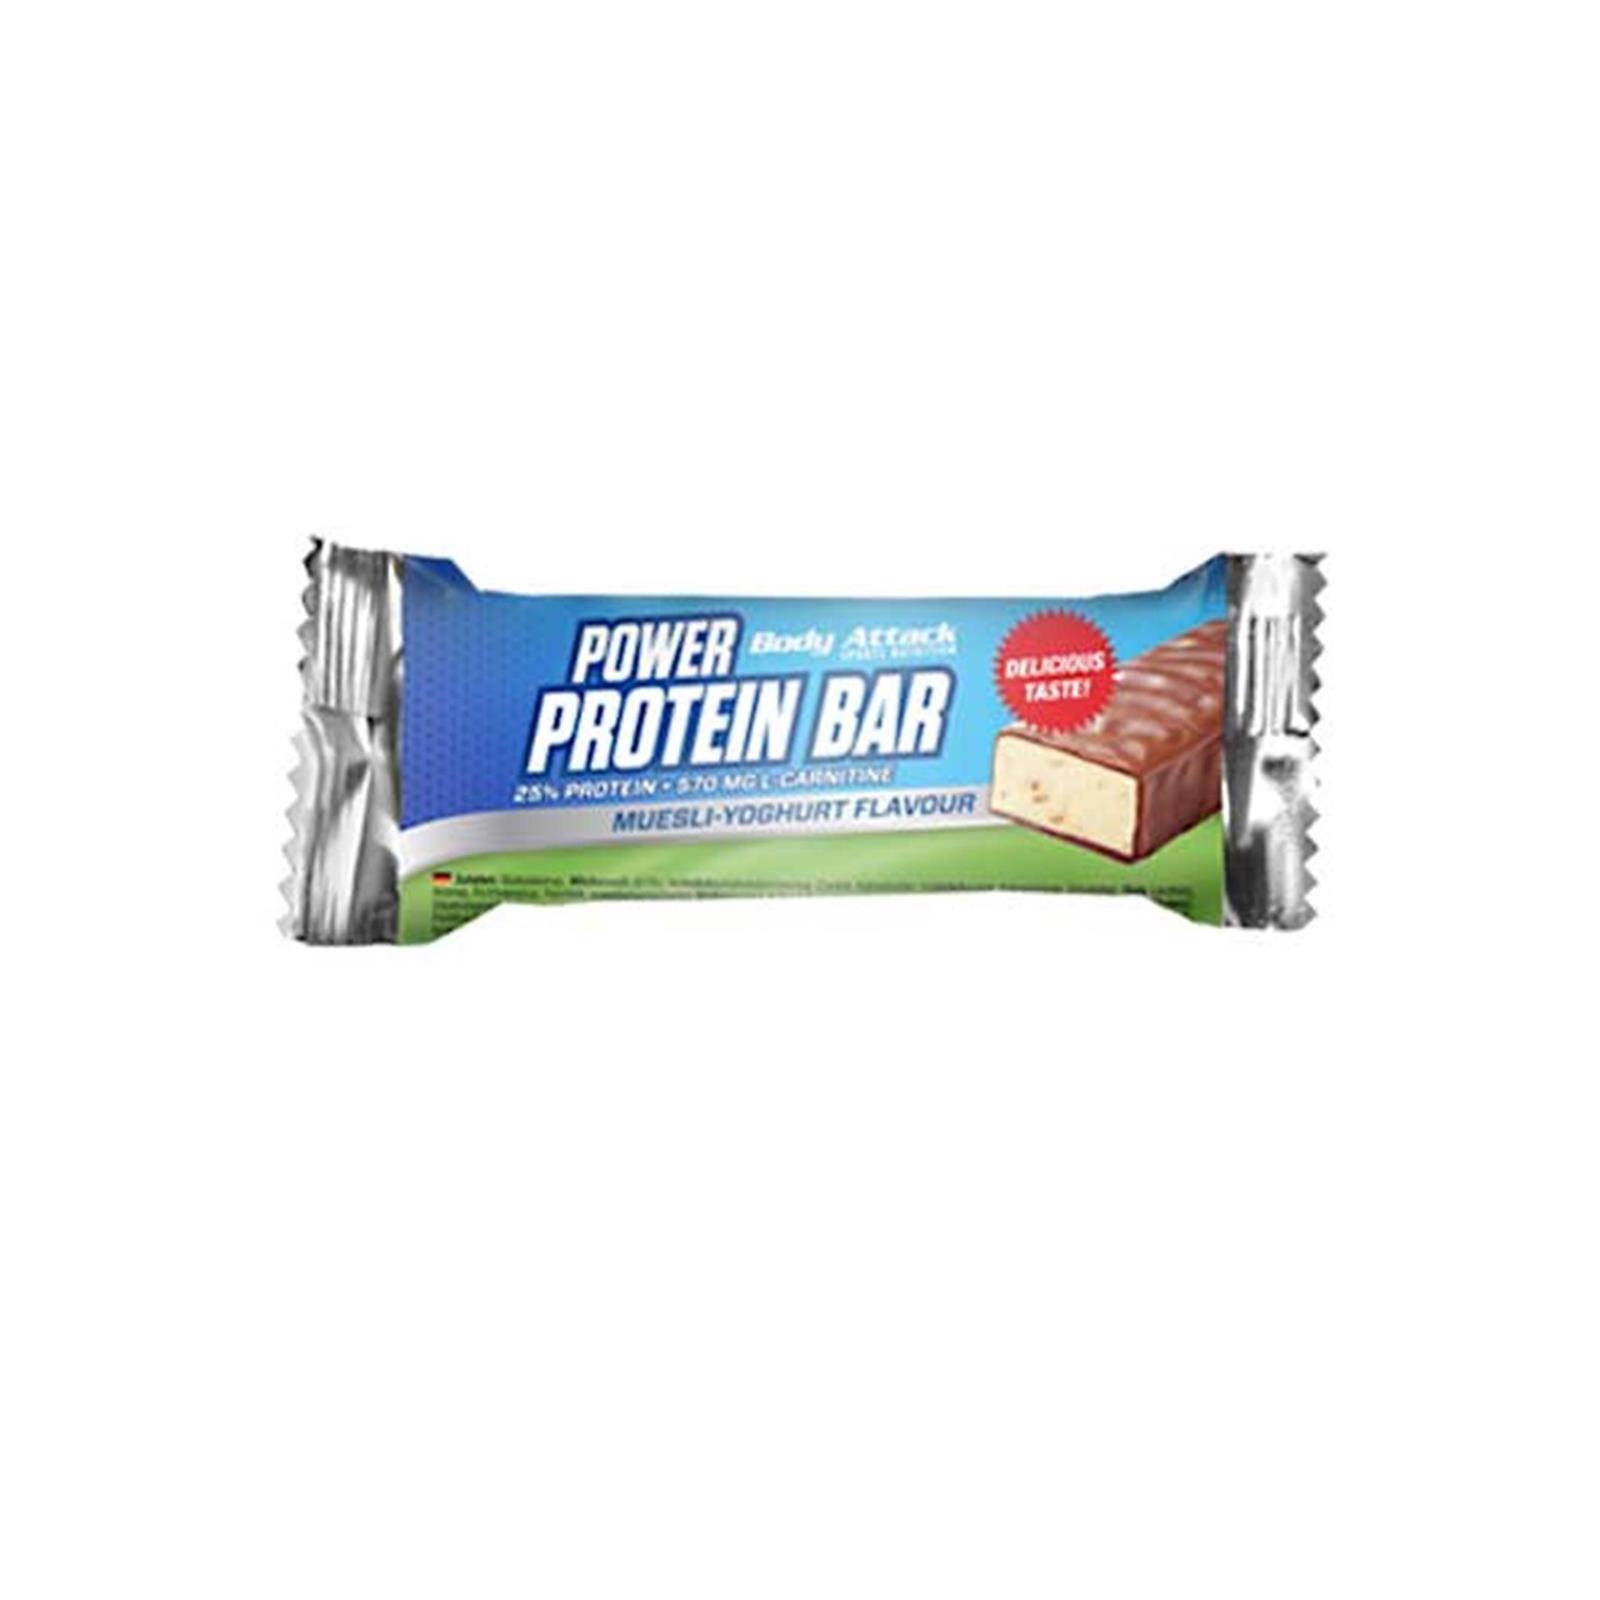 Body Attack Power Protein Bar, 35g